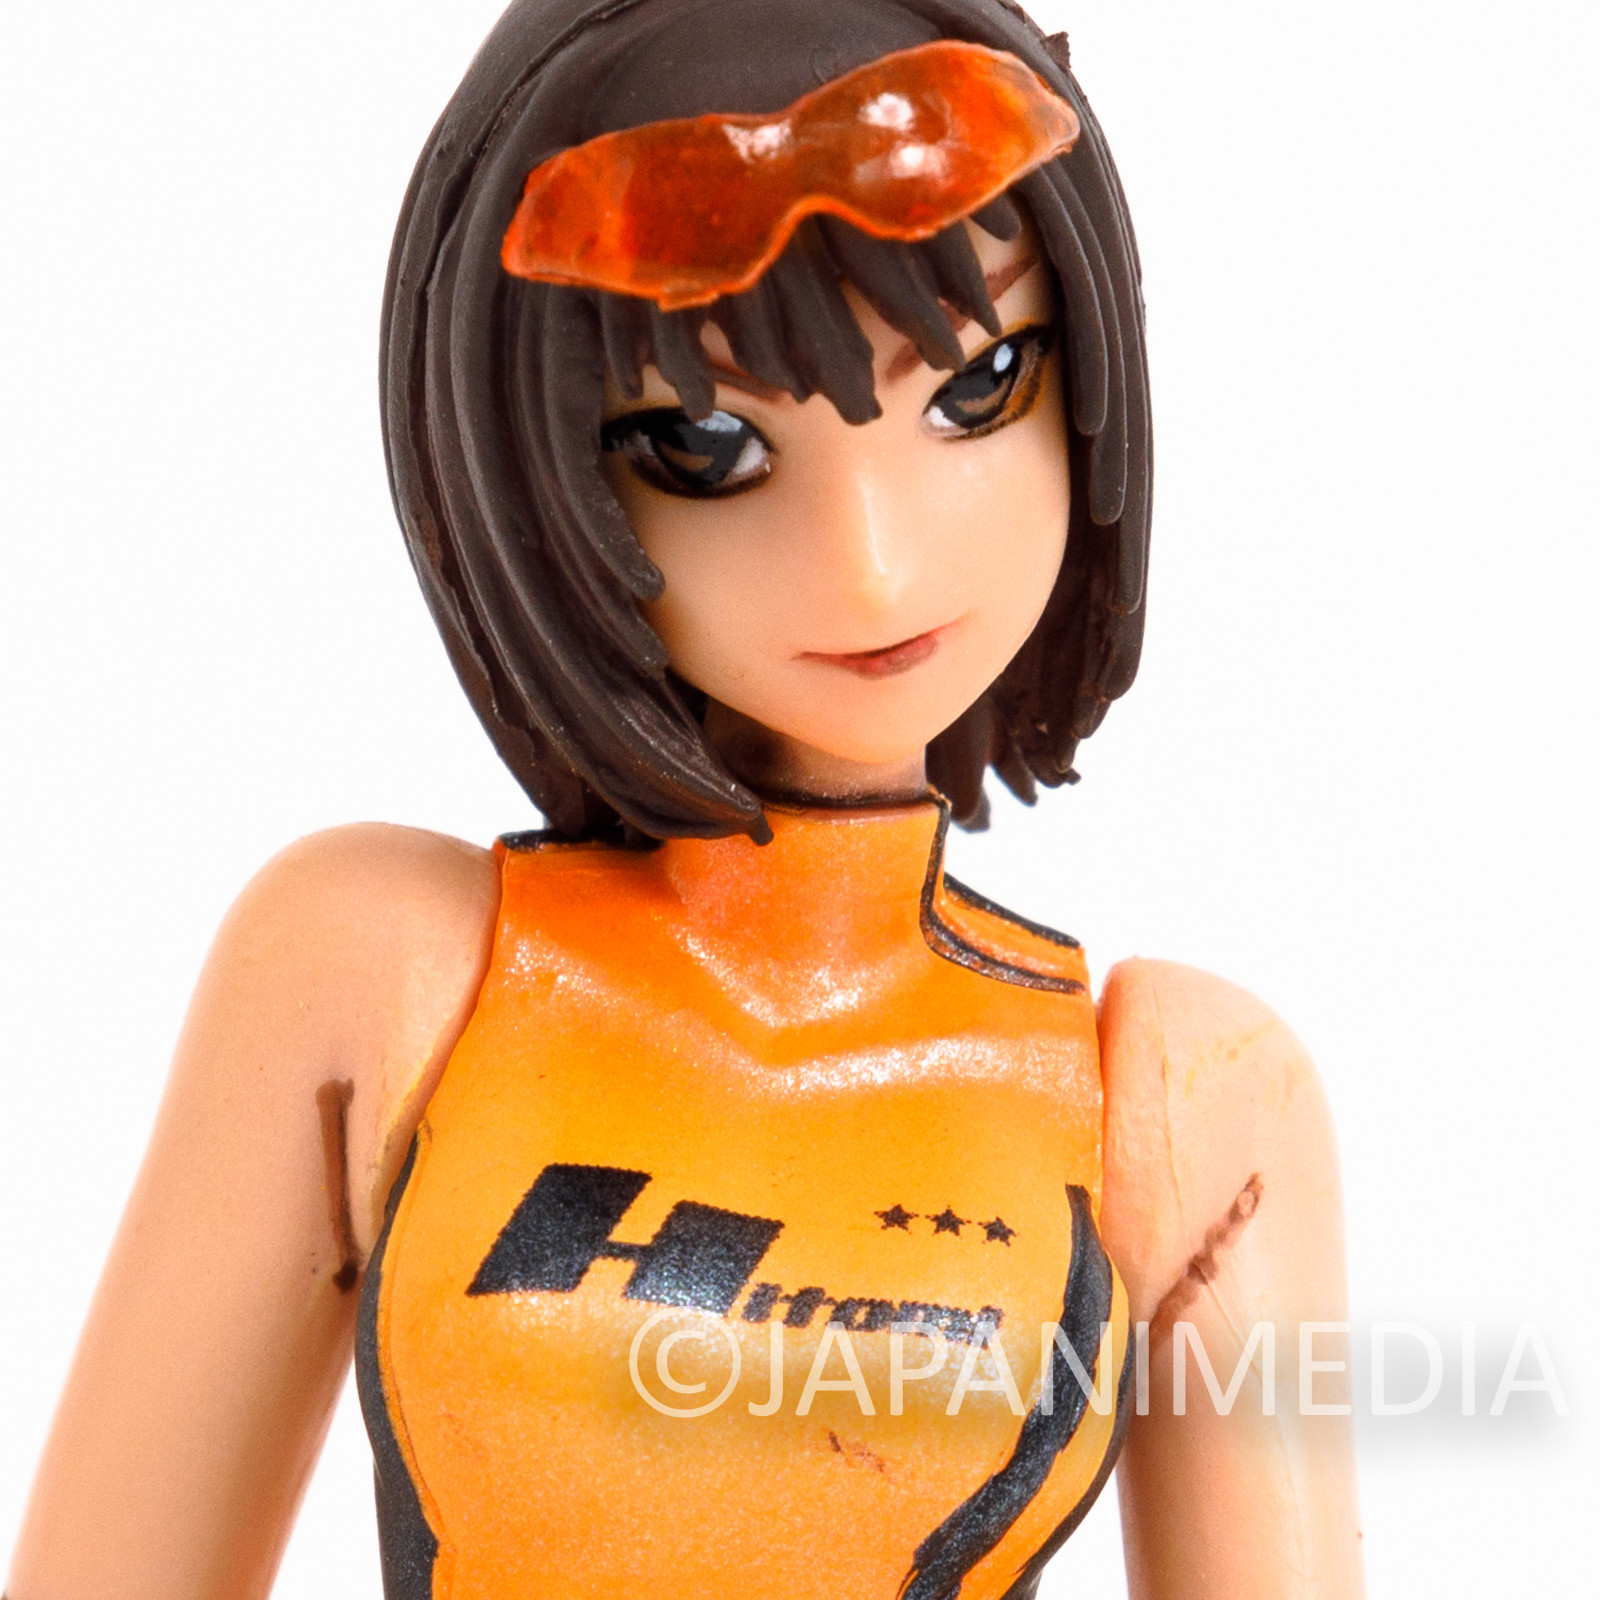 Namco Image Characters Hitomi Yoshino Mini Figure Namco Yujin JAPAN GAME